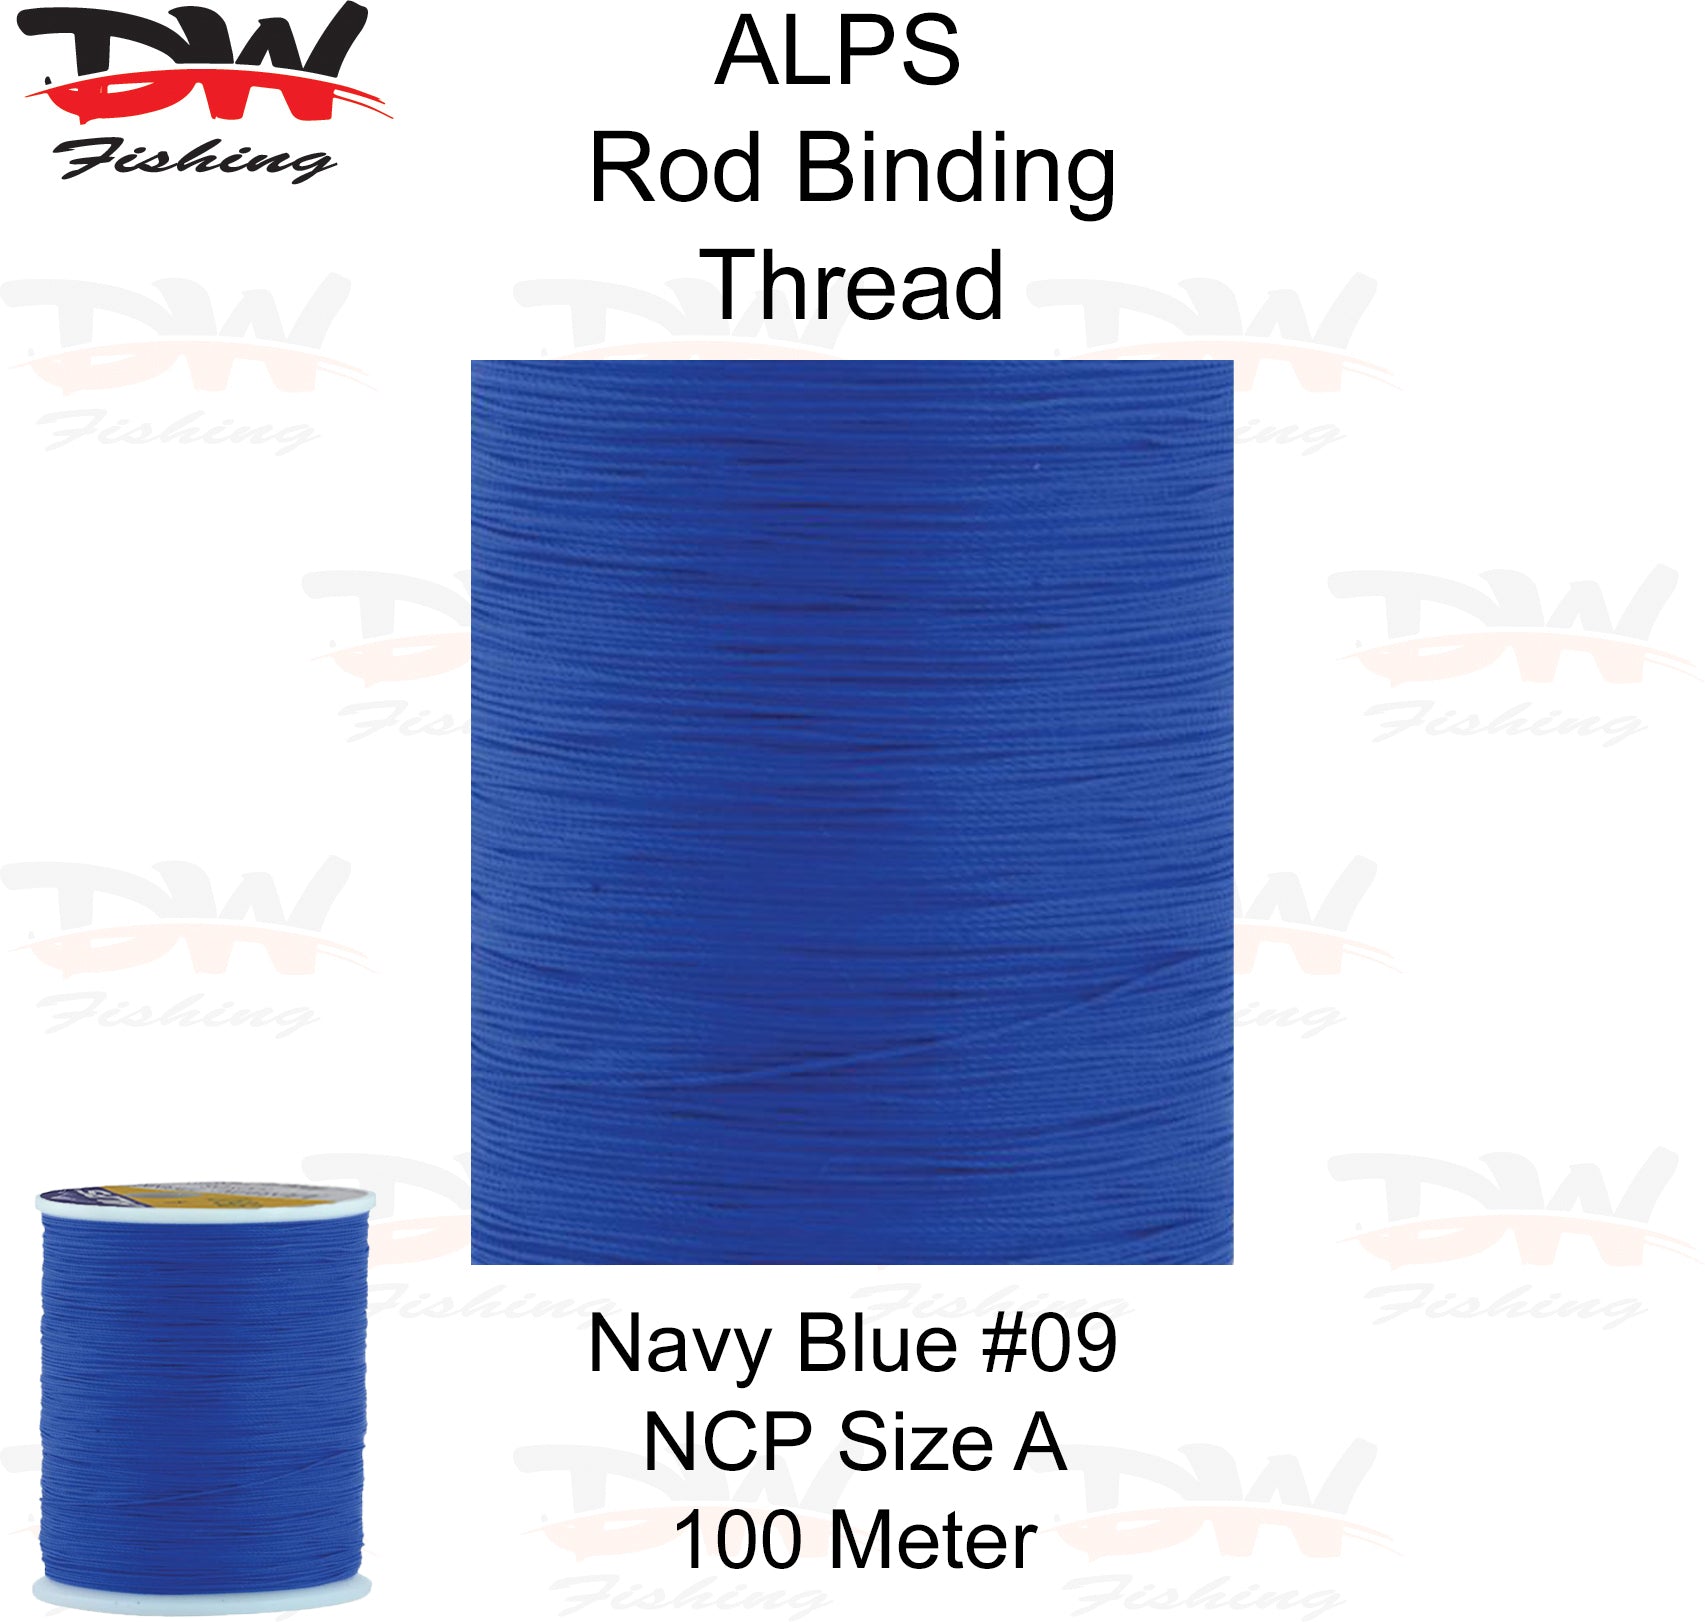 ALPS nylon rod binding thread navy blue